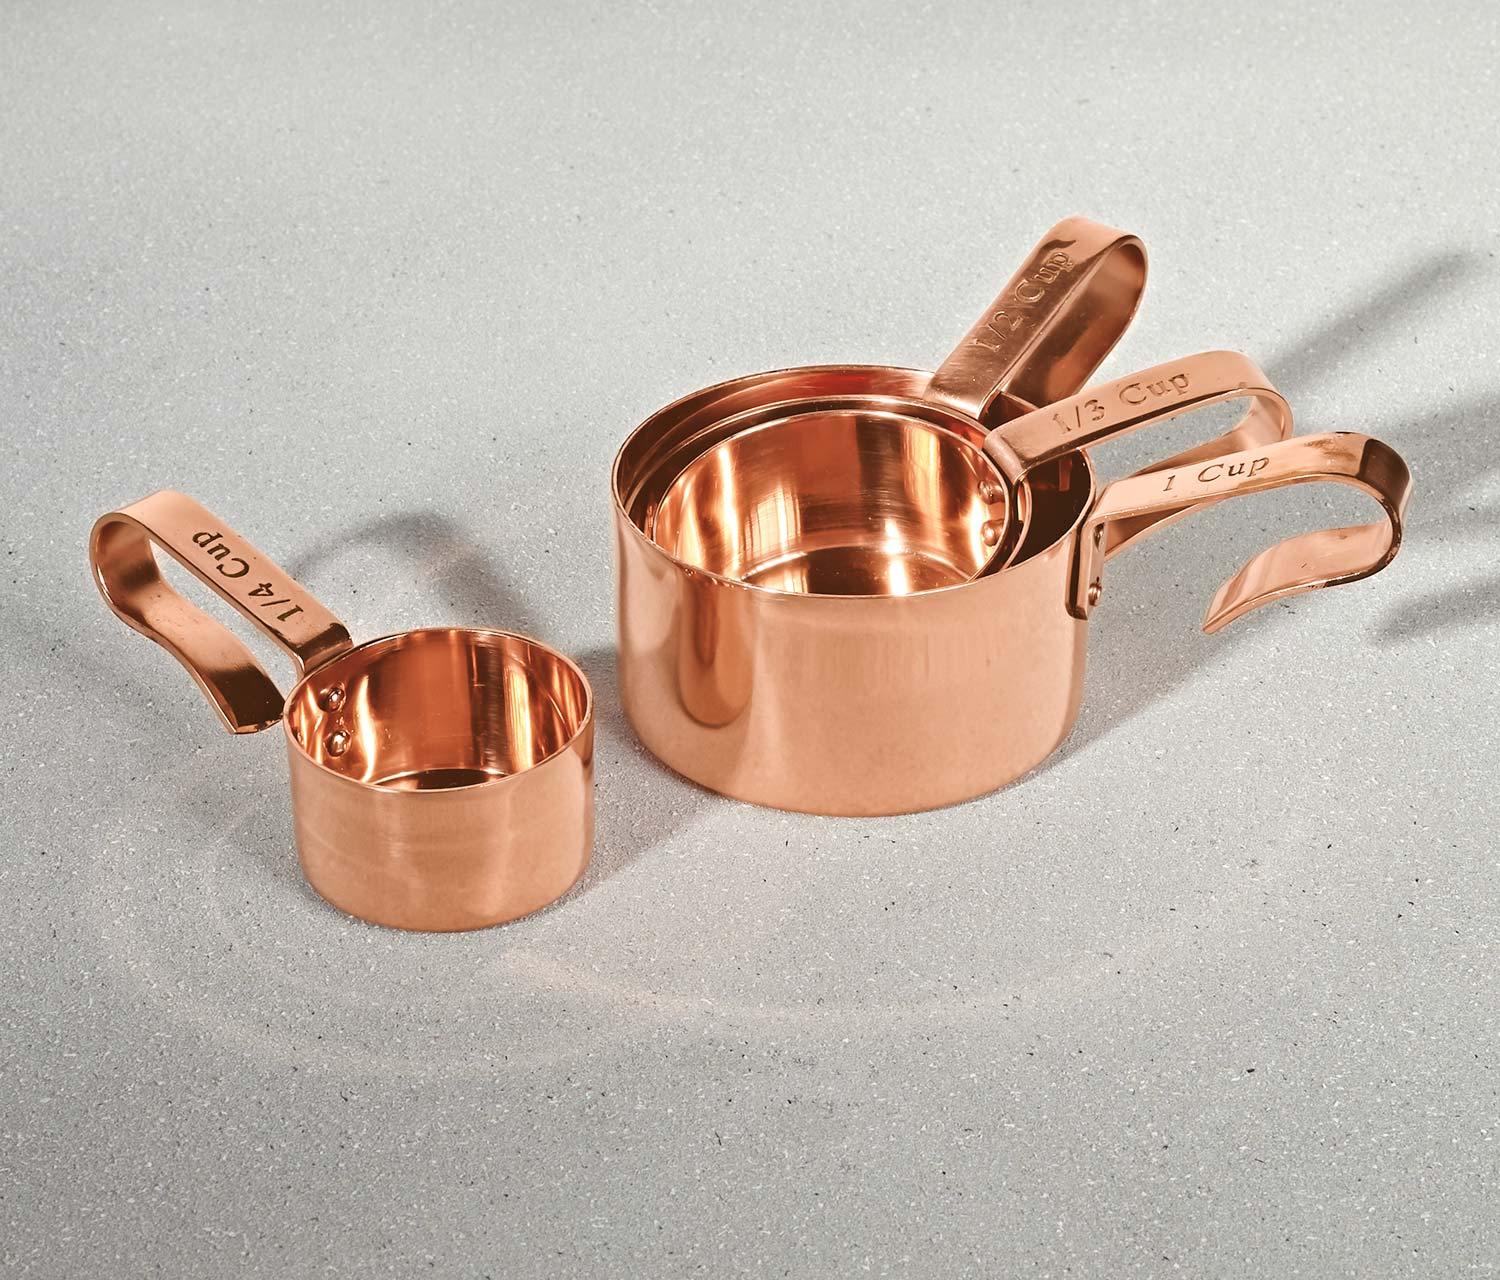 Chelsea Shiny Copper Measuring Cups Set